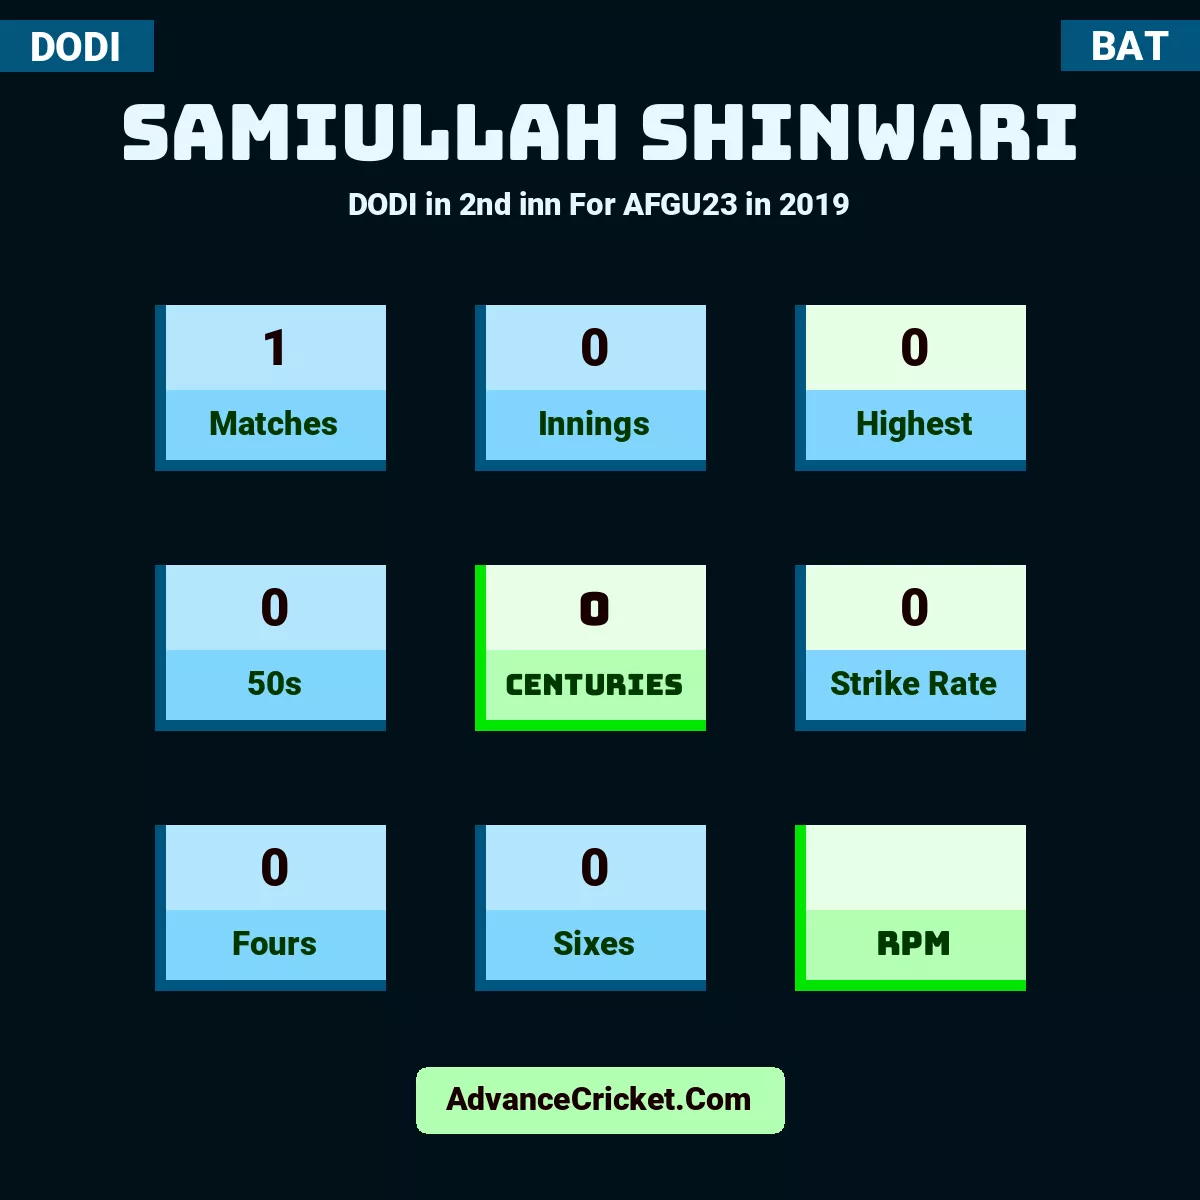 Samiullah Shinwari DODI  in 2nd inn For AFGU23 in 2019, Samiullah Shinwari played 1 matches, scored 0 runs as highest, 0 half-centuries, and 0 centuries, with a strike rate of 0. S.Shinwari hit 0 fours and 0 sixes.